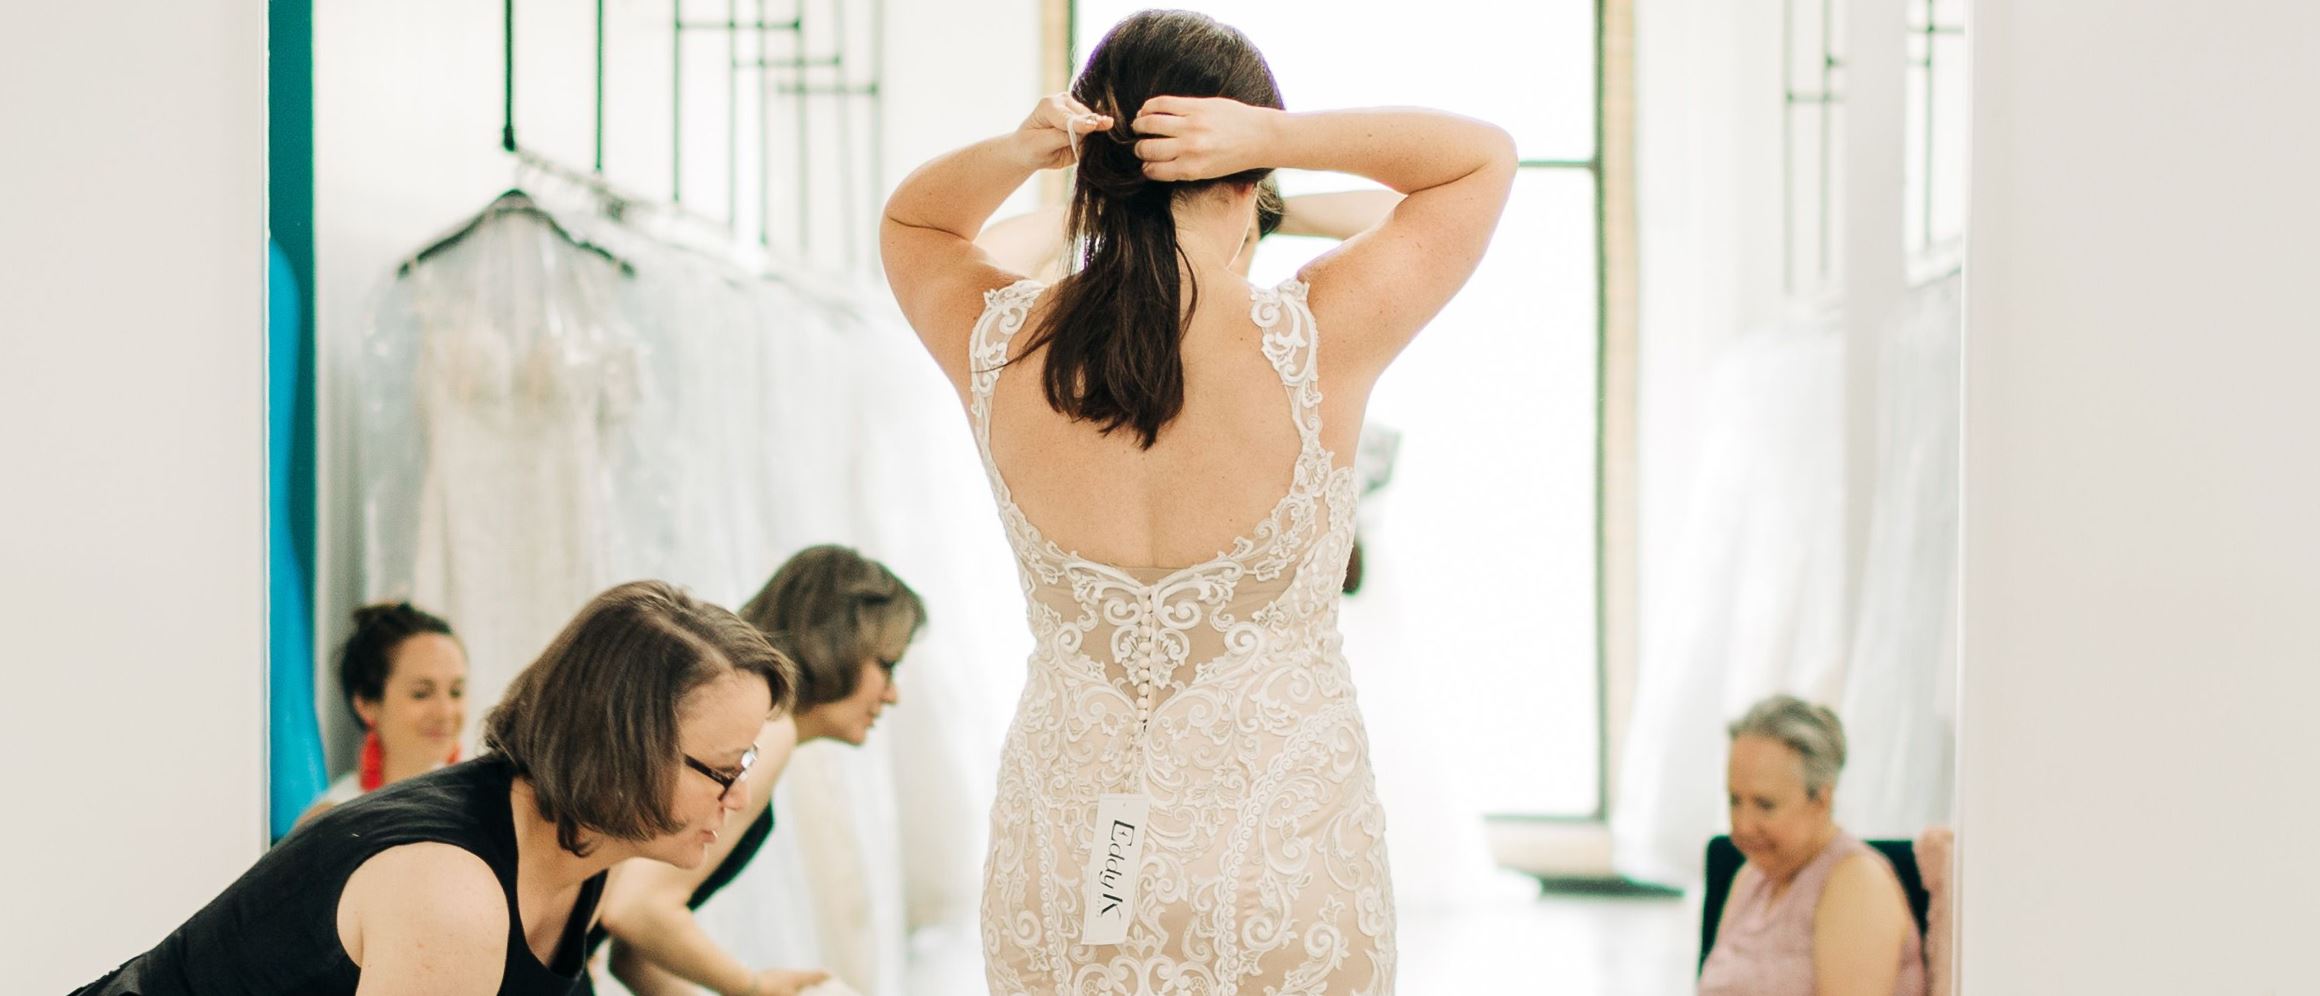 Model wearing a bridal dress